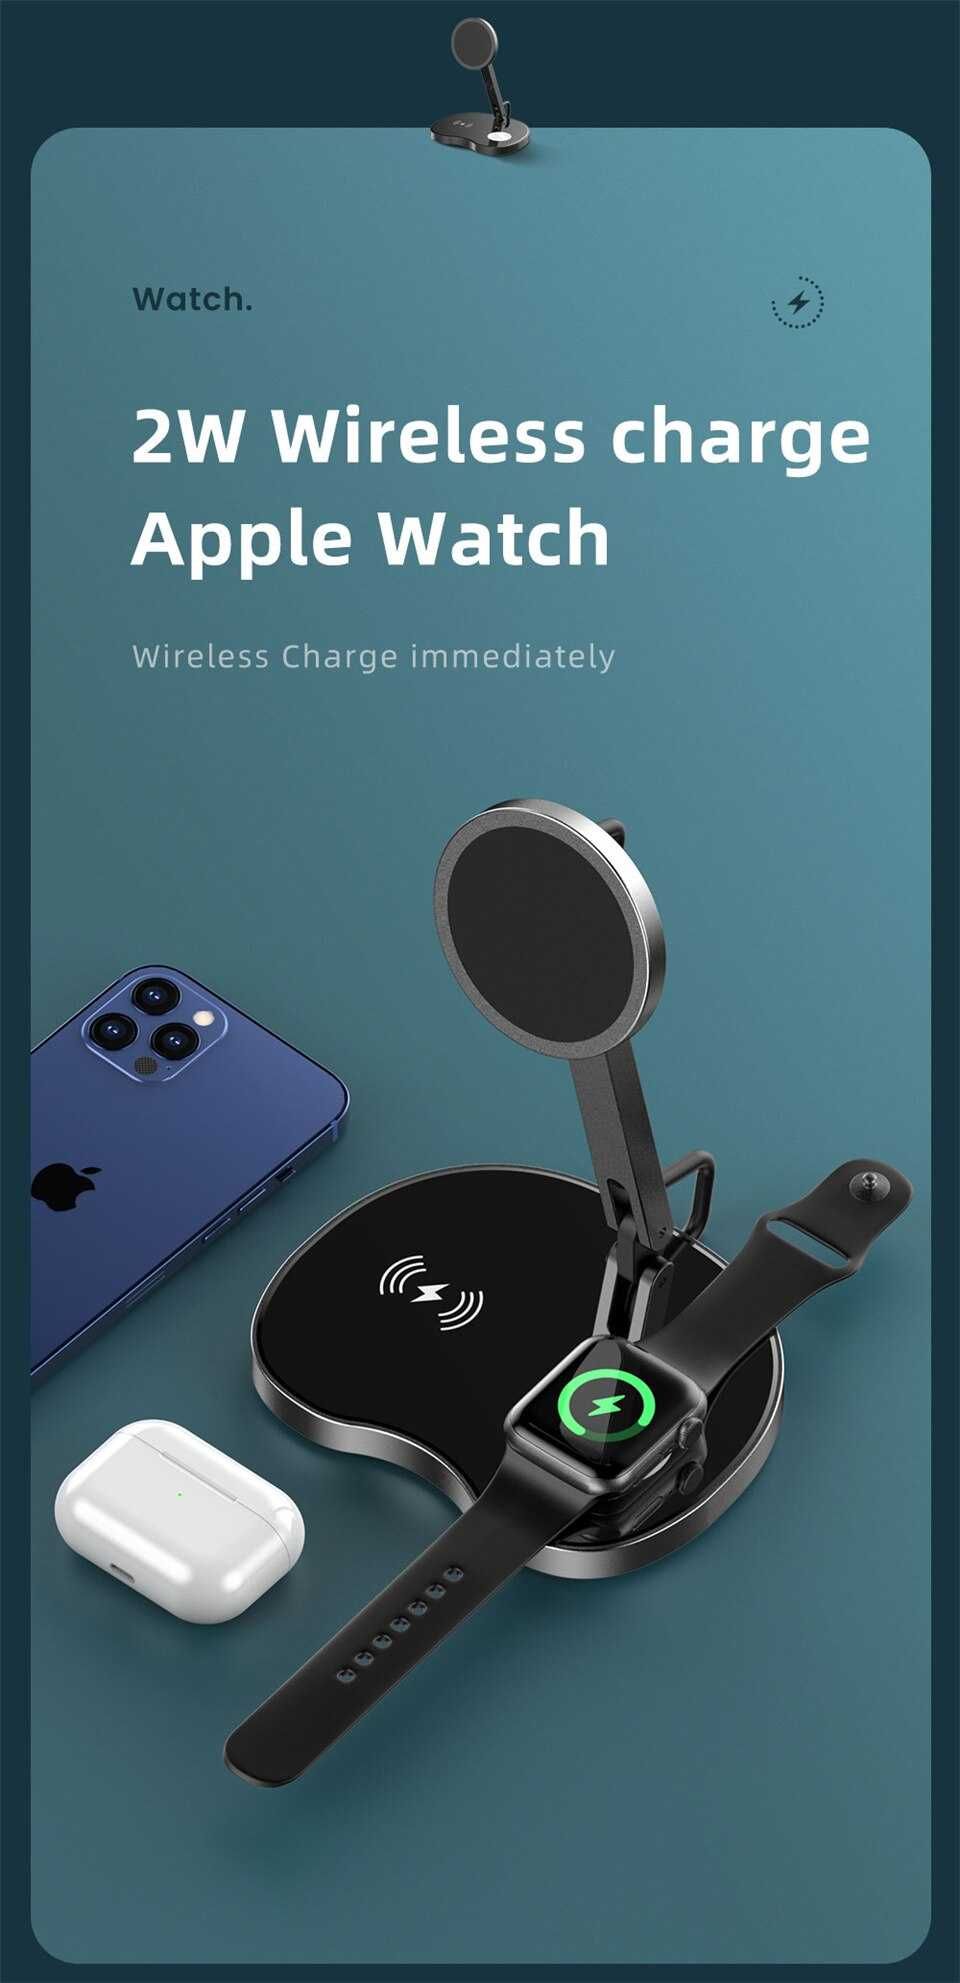 Proda PD-W3 Док-станция 3в1 MagSafe 15W для iPhone Apple Watch AirPods